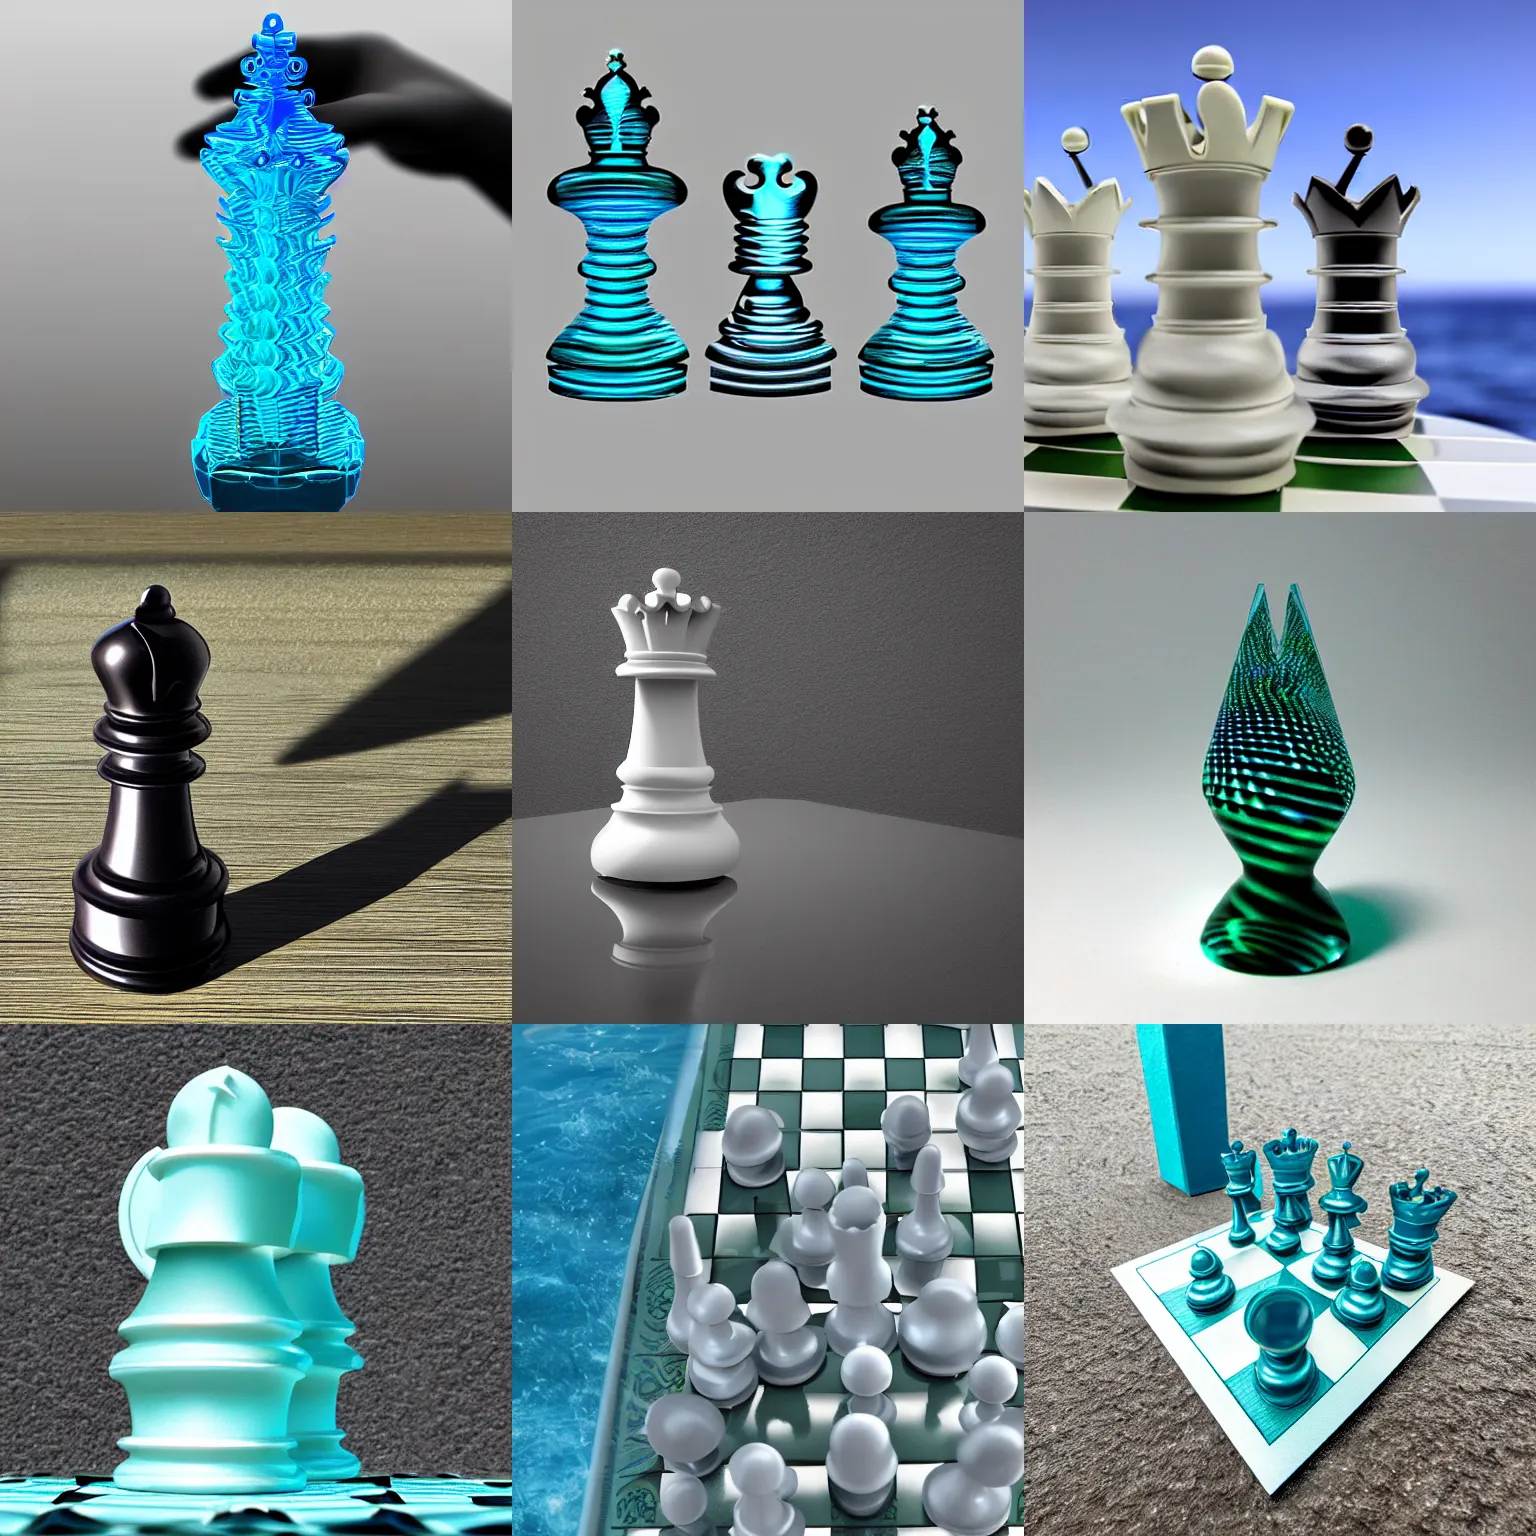 Prompt: sleek, mechanical, queen chess piece, chessboard made of ocean, digital forest, high quality architectural art